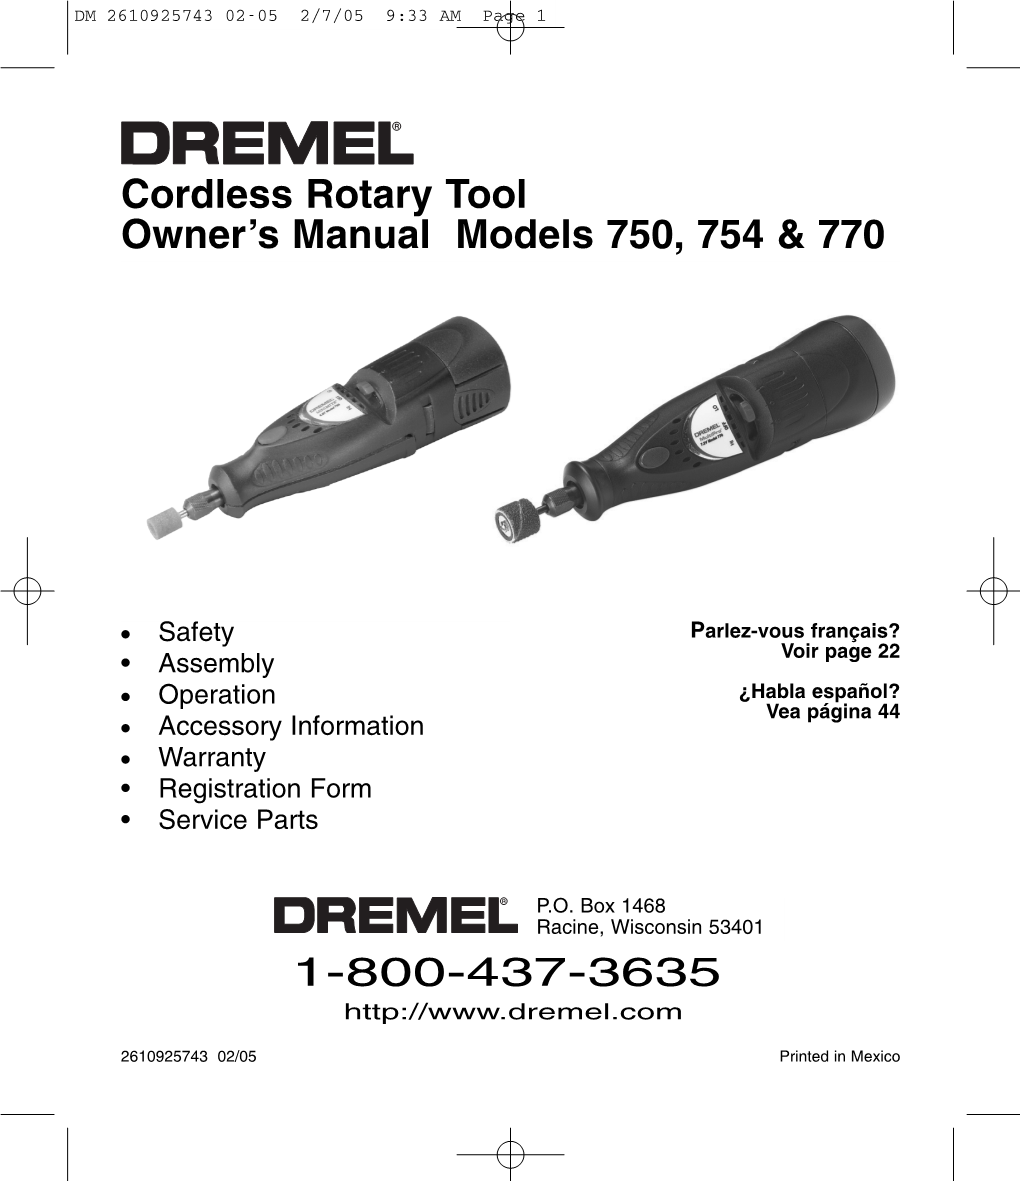 Cordless Rotary Tool Owner's Manual Models 750, 754 & 770 1-800-437